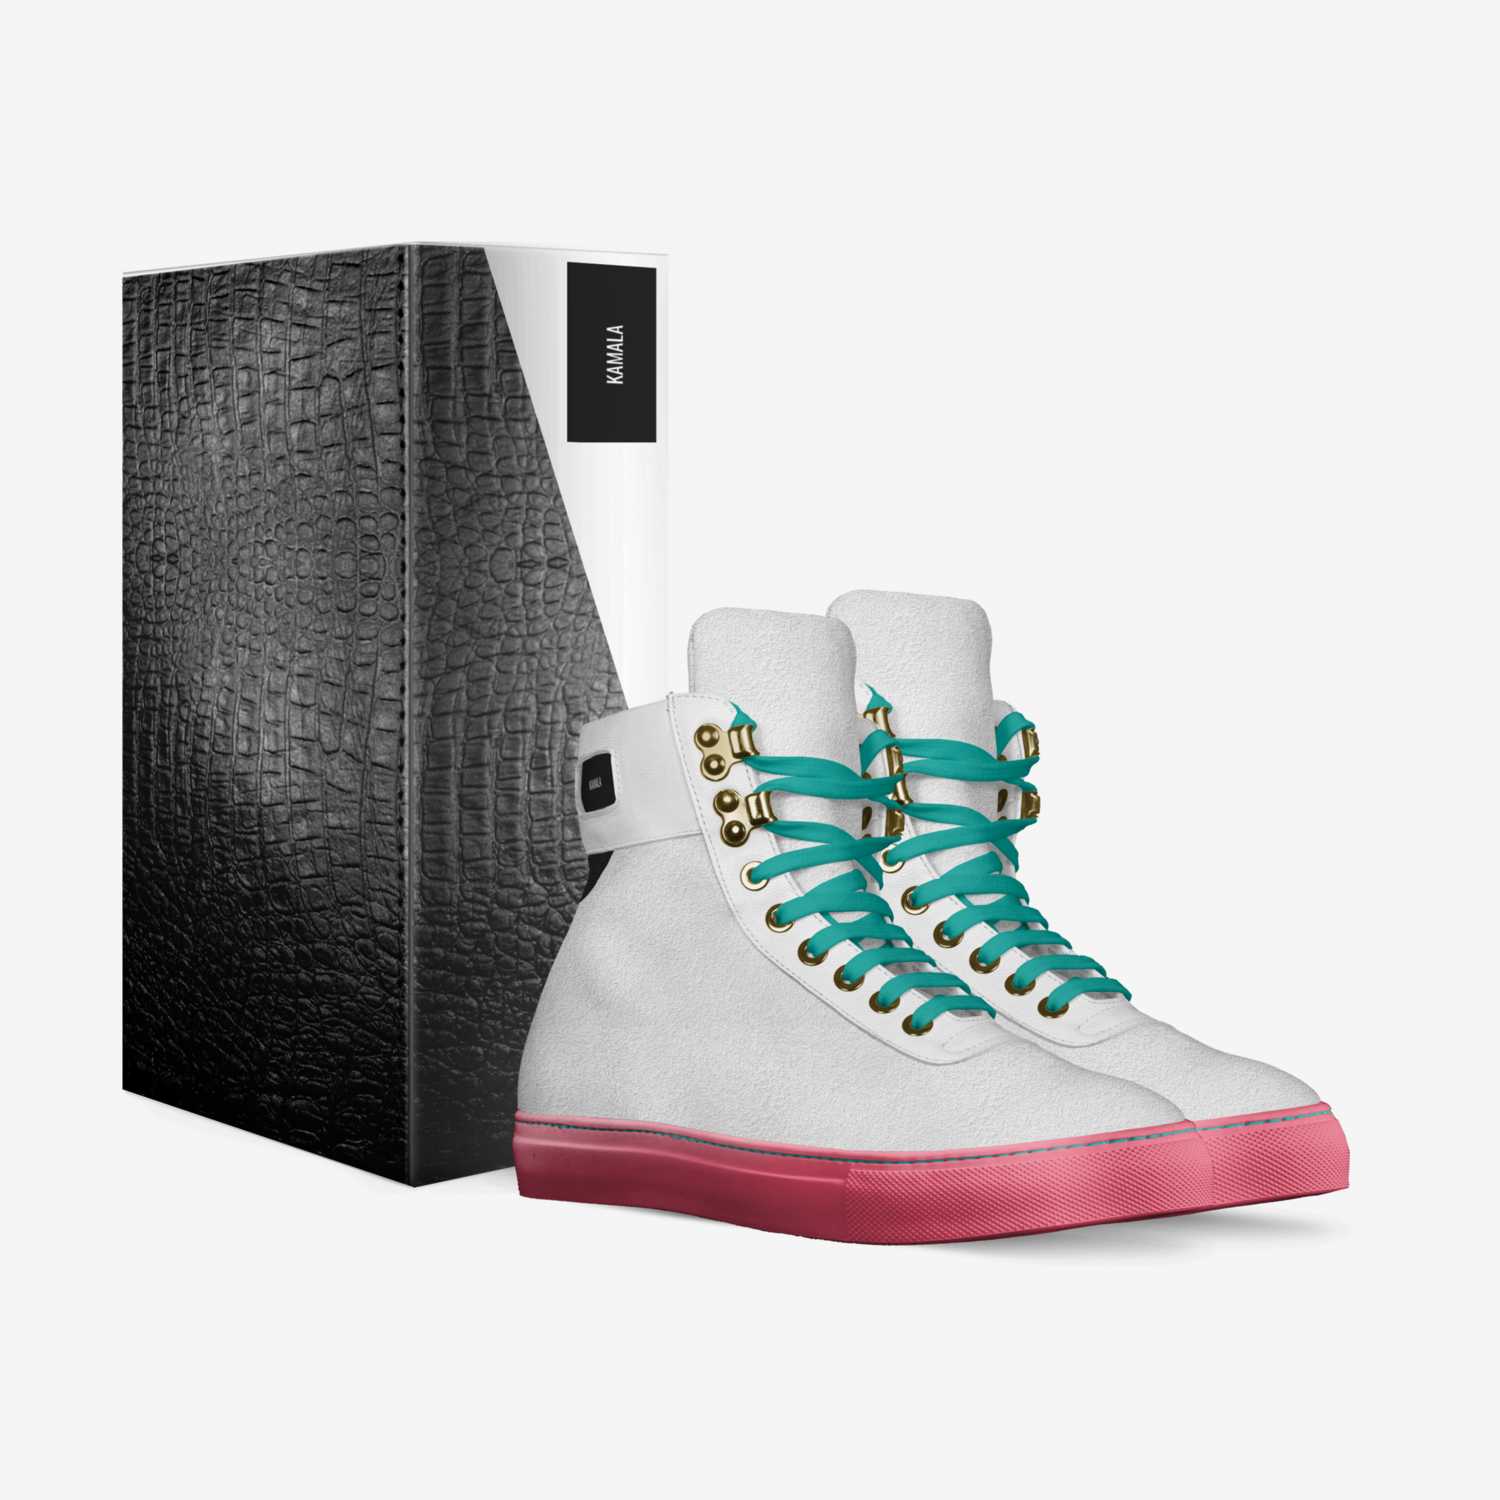 KAMALA custom made in Italy shoes by Carmela Dyette | Box view